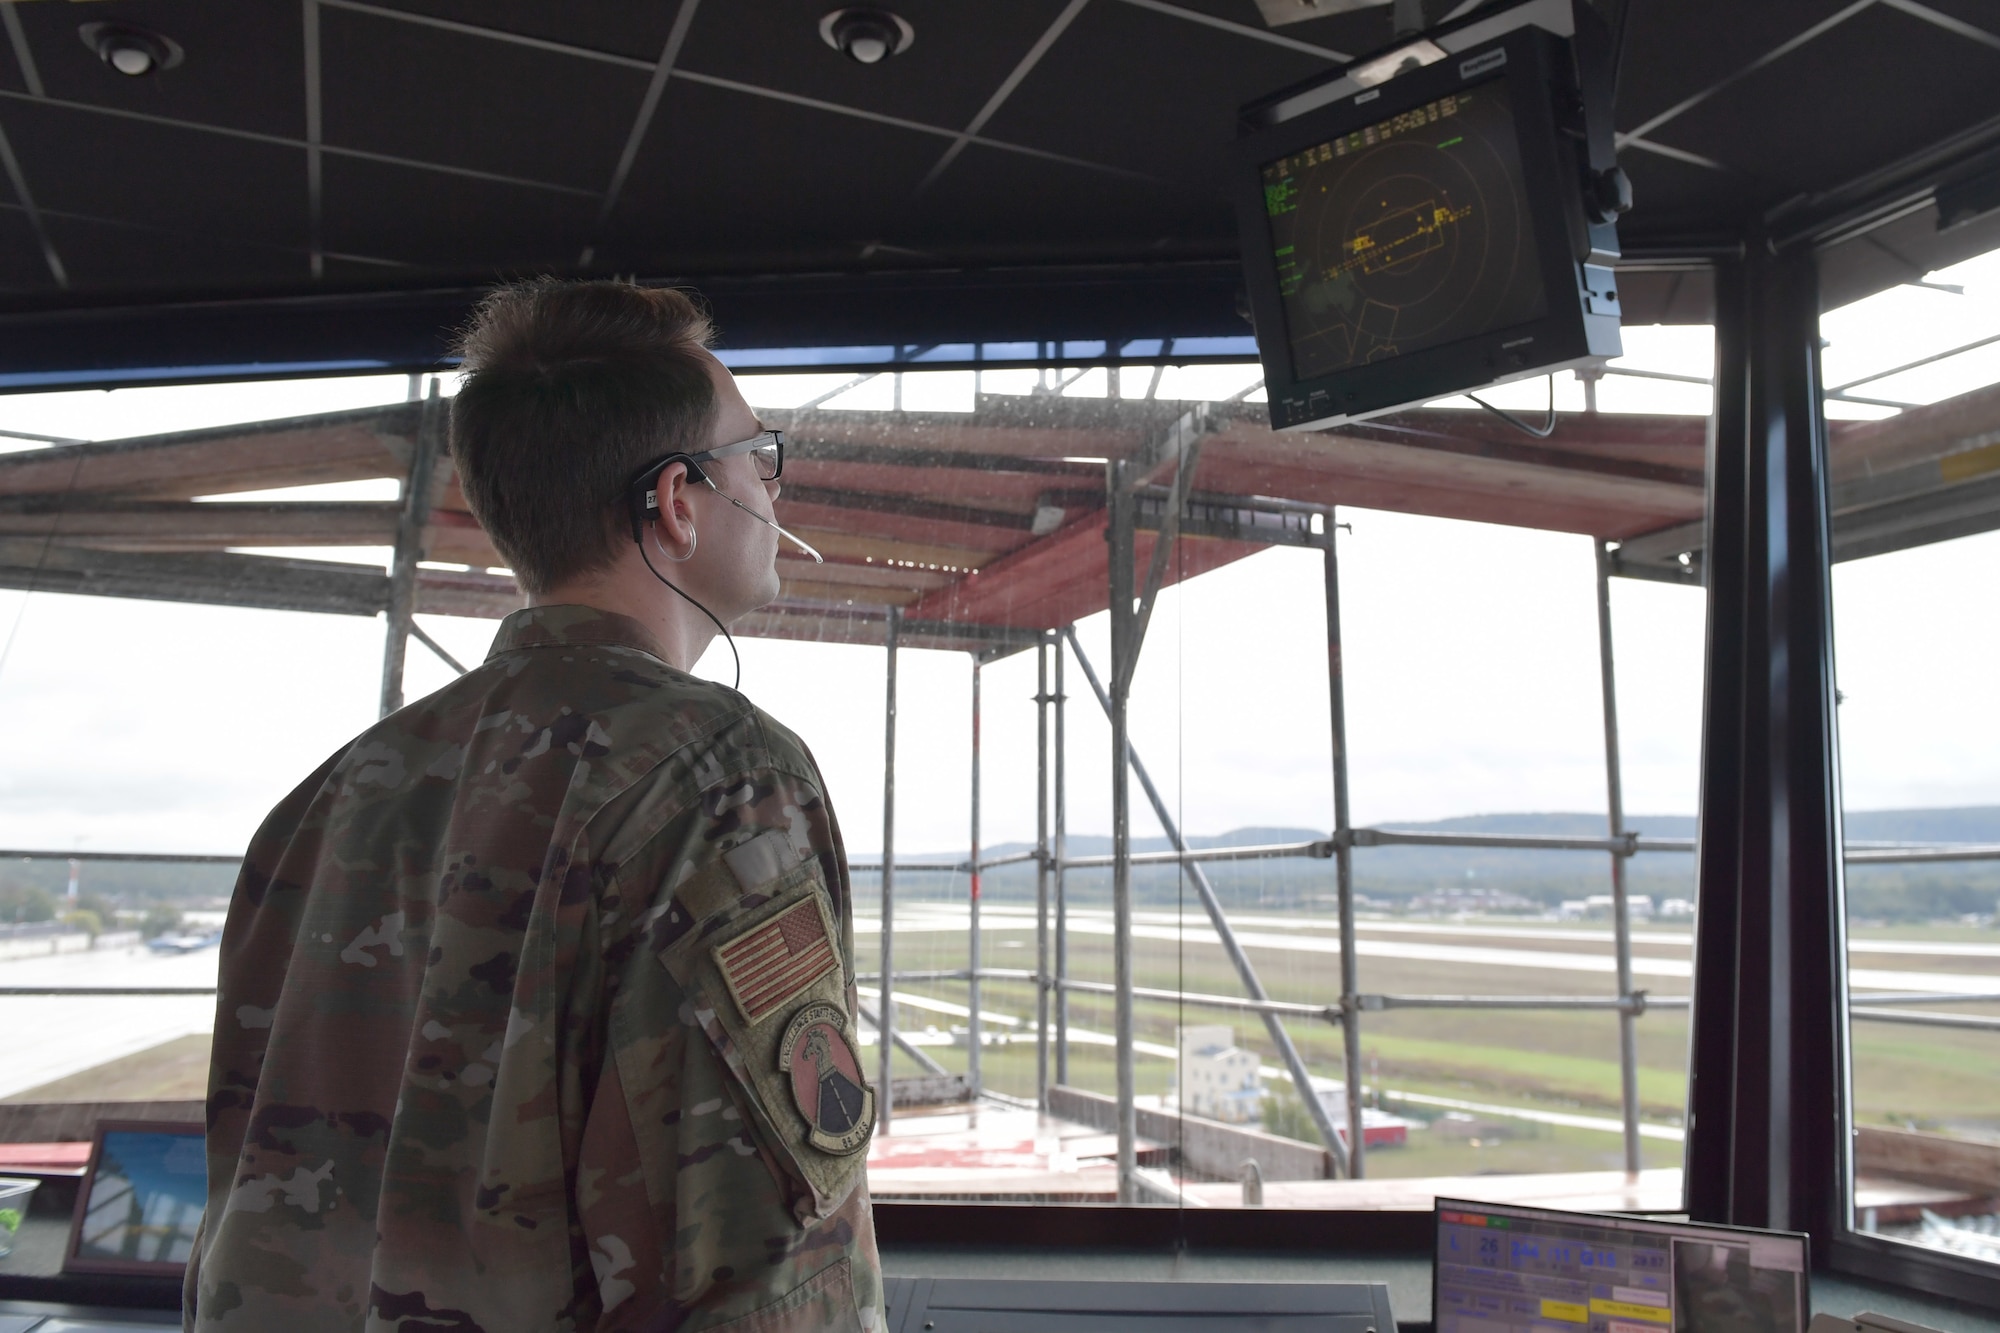 An Airman staring at a radar screen.